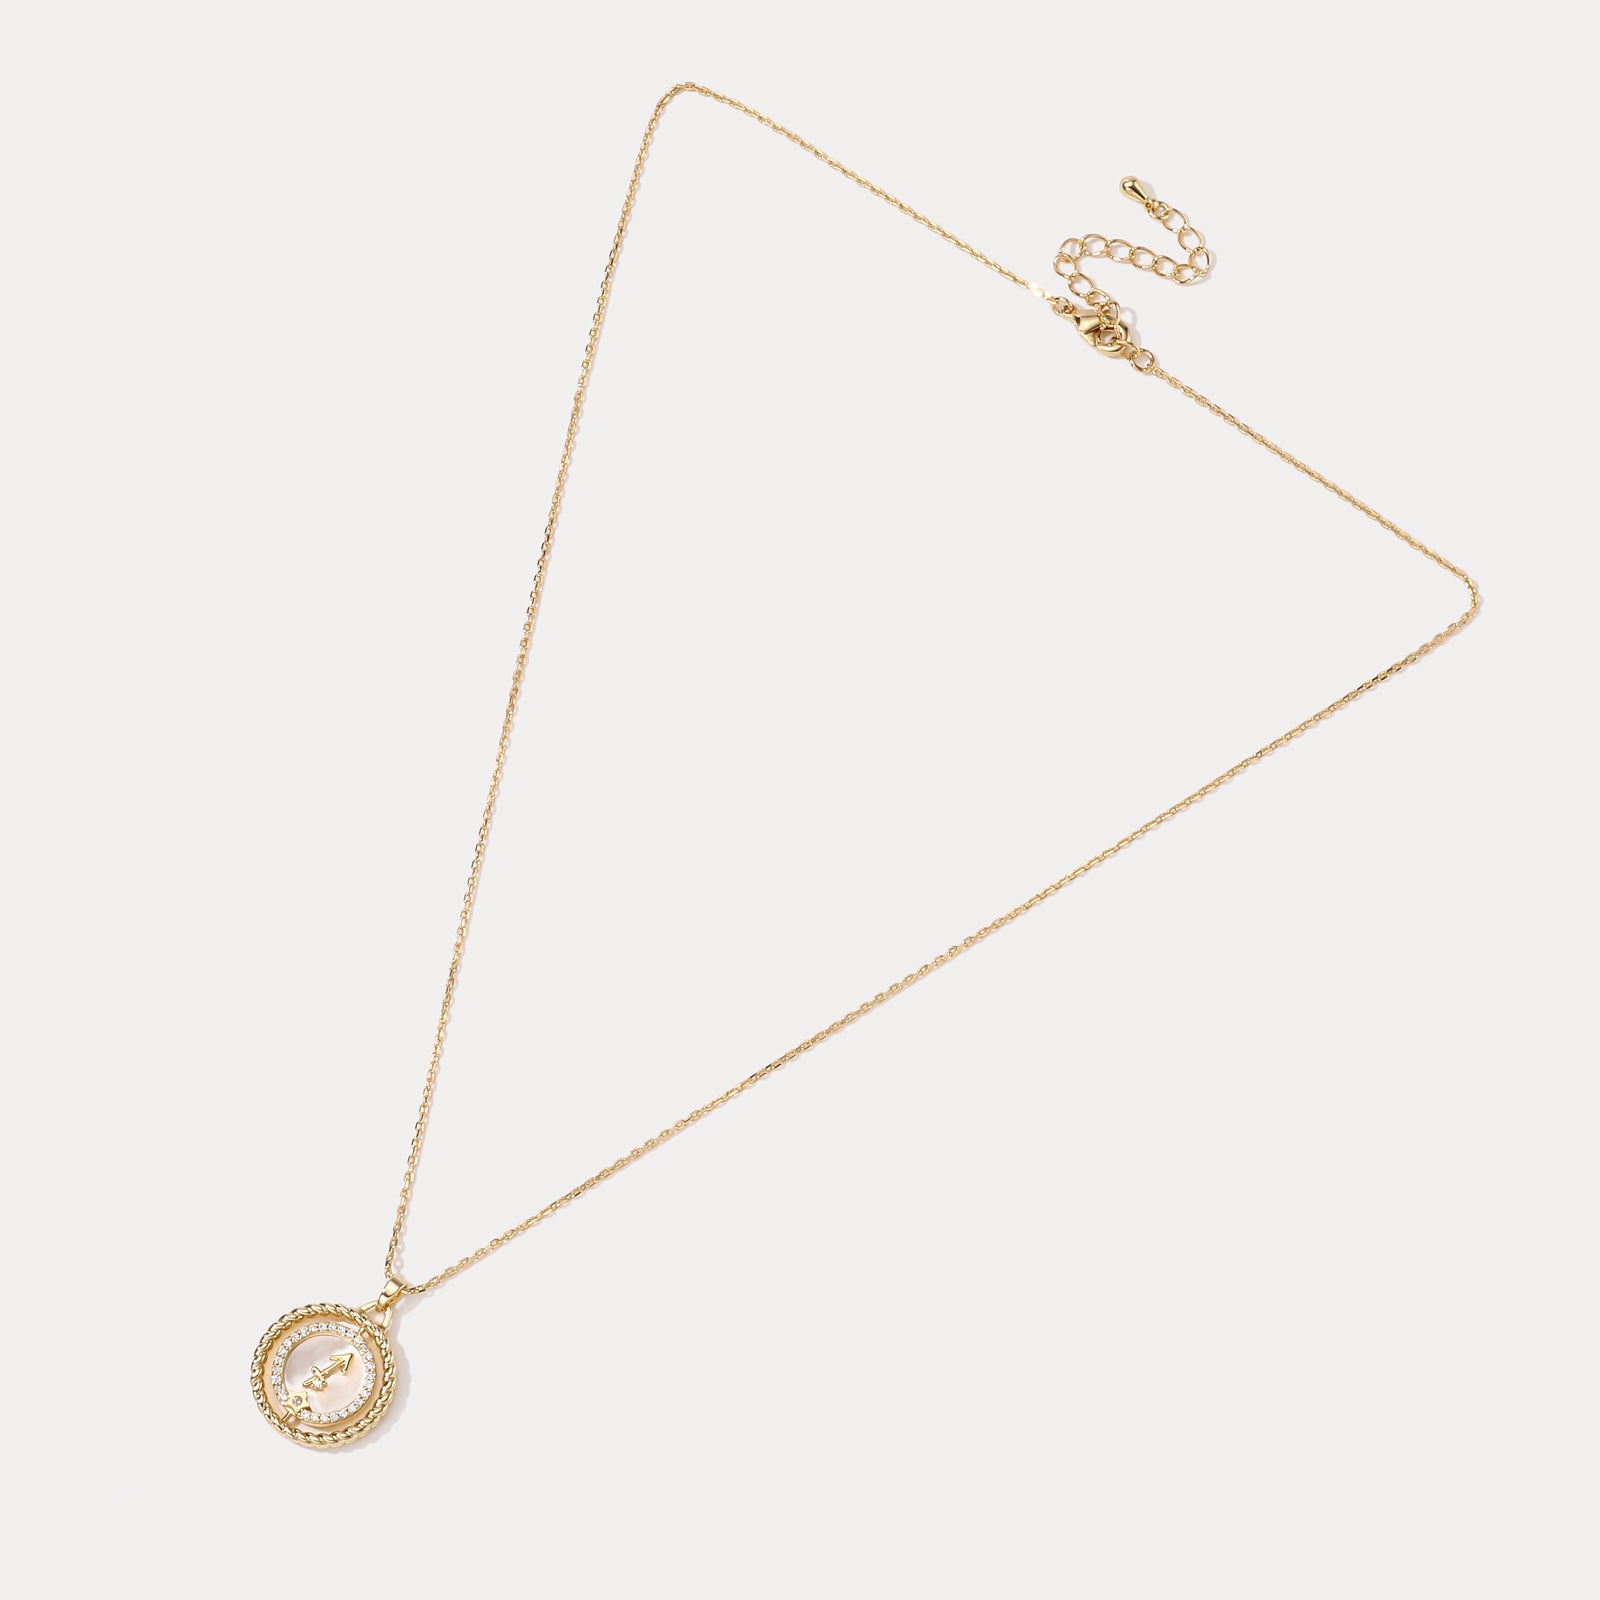 Sagittarius Galaxy Constellation Pendant Necklace Gift for Friend